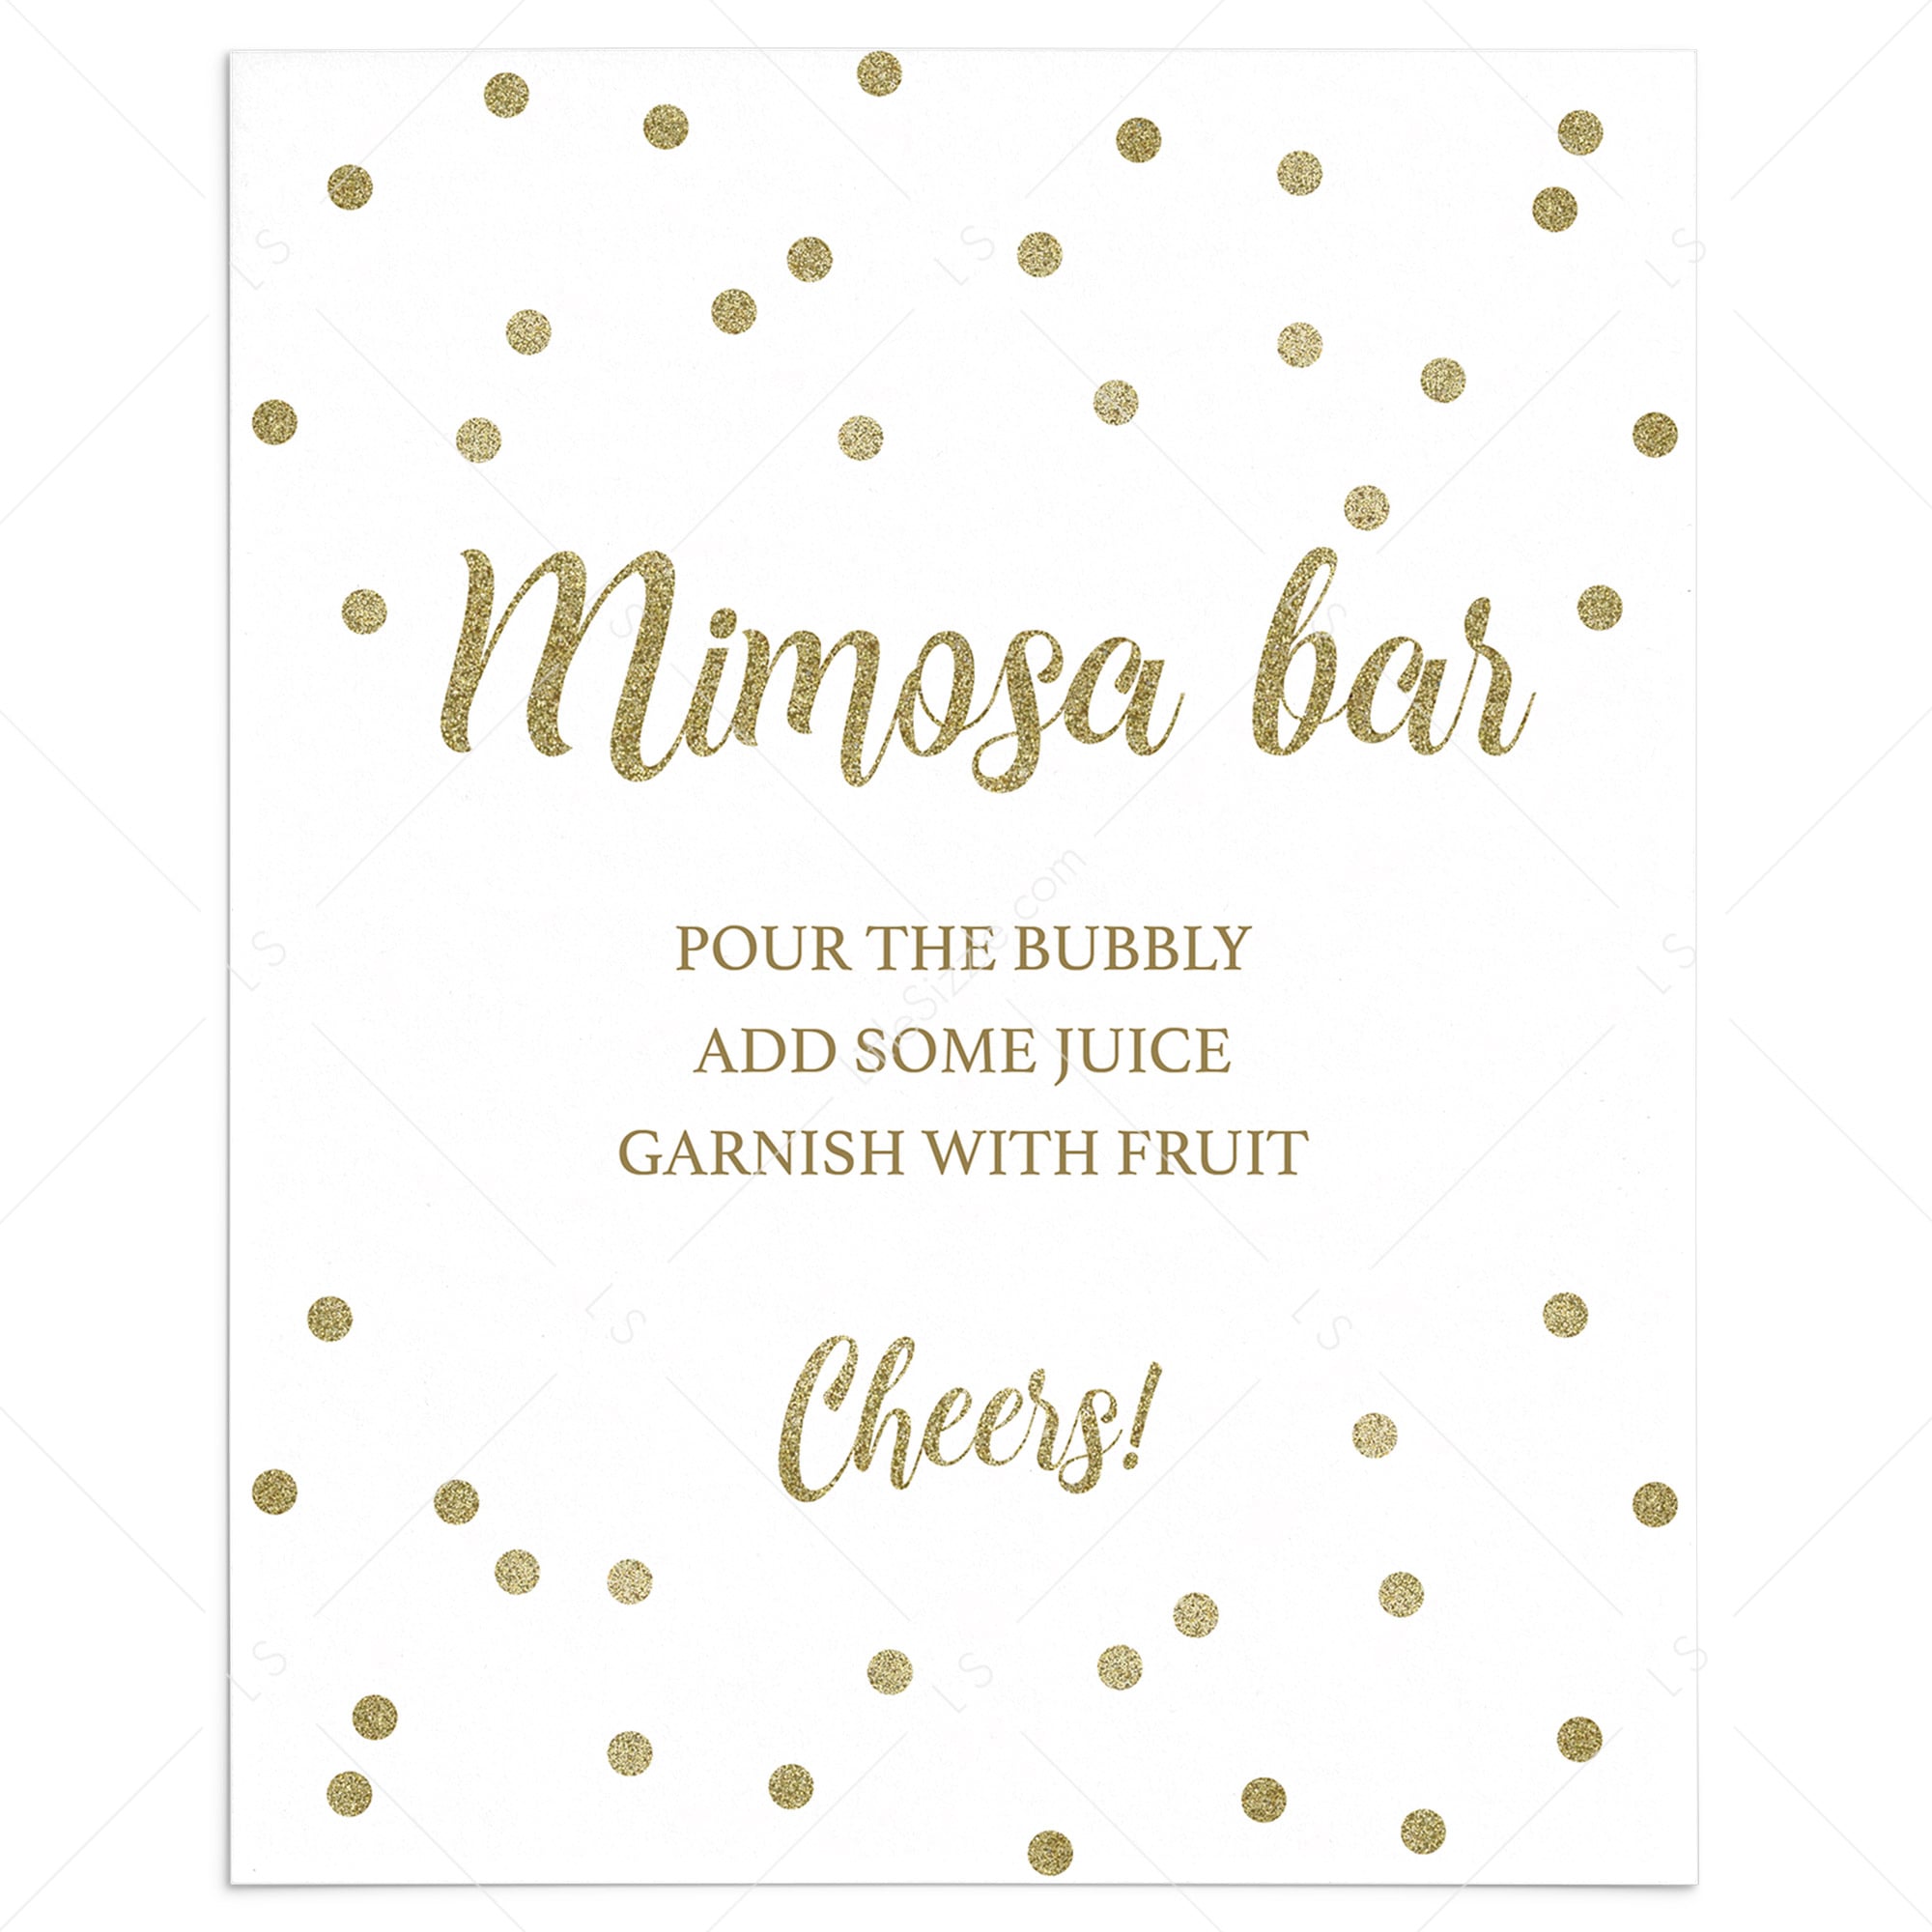 Mimosa Bar Sign Printable. Black and Gold Wedding Bar Sign By